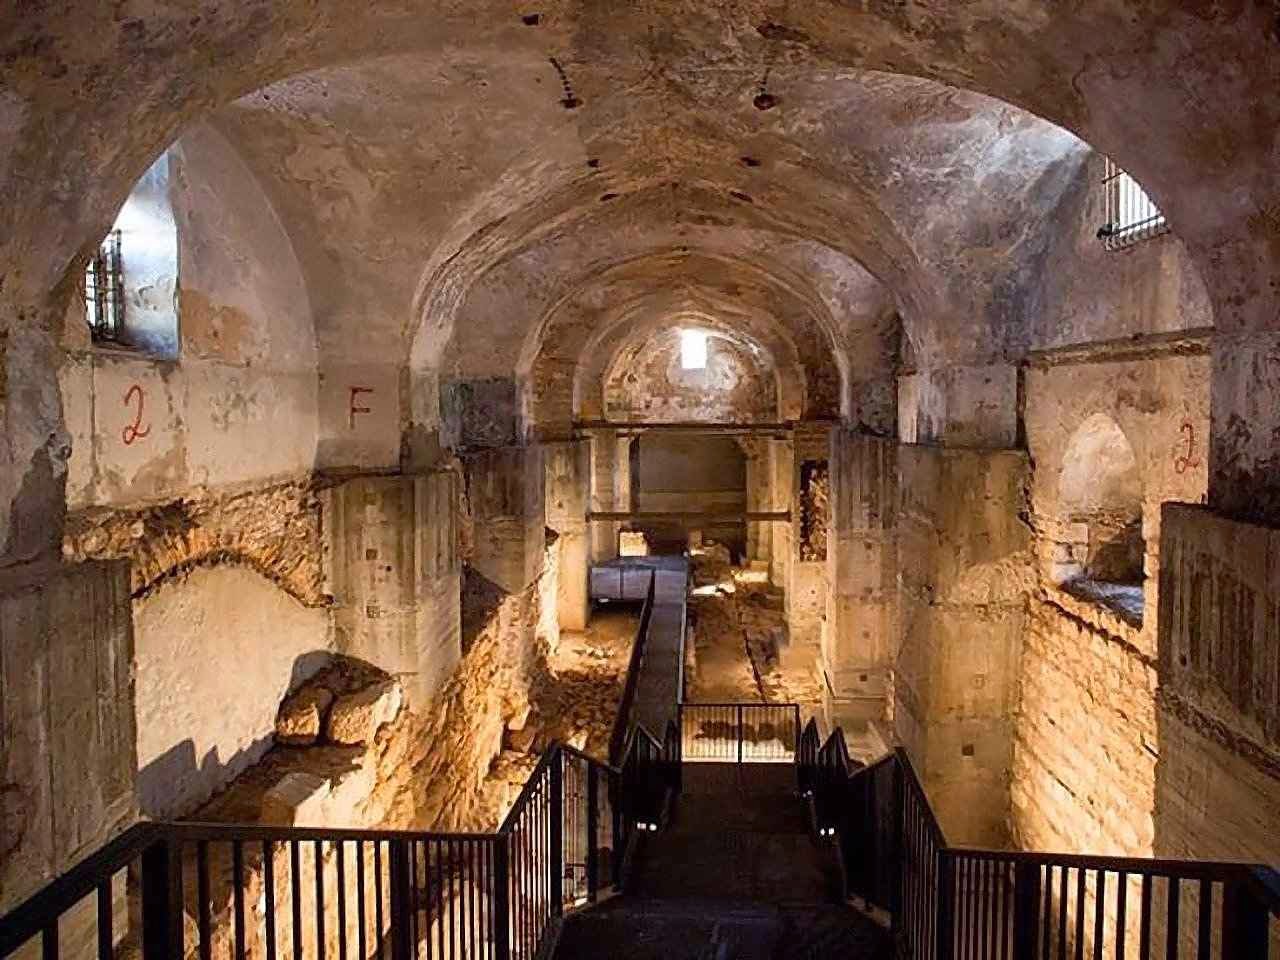 Neste complexo hoje soterrado poderia ter acontecido o julgamento de Jesus, segundo os arqueólogos  (Foto: Oded Antman, Ministério israelense de Turismo).